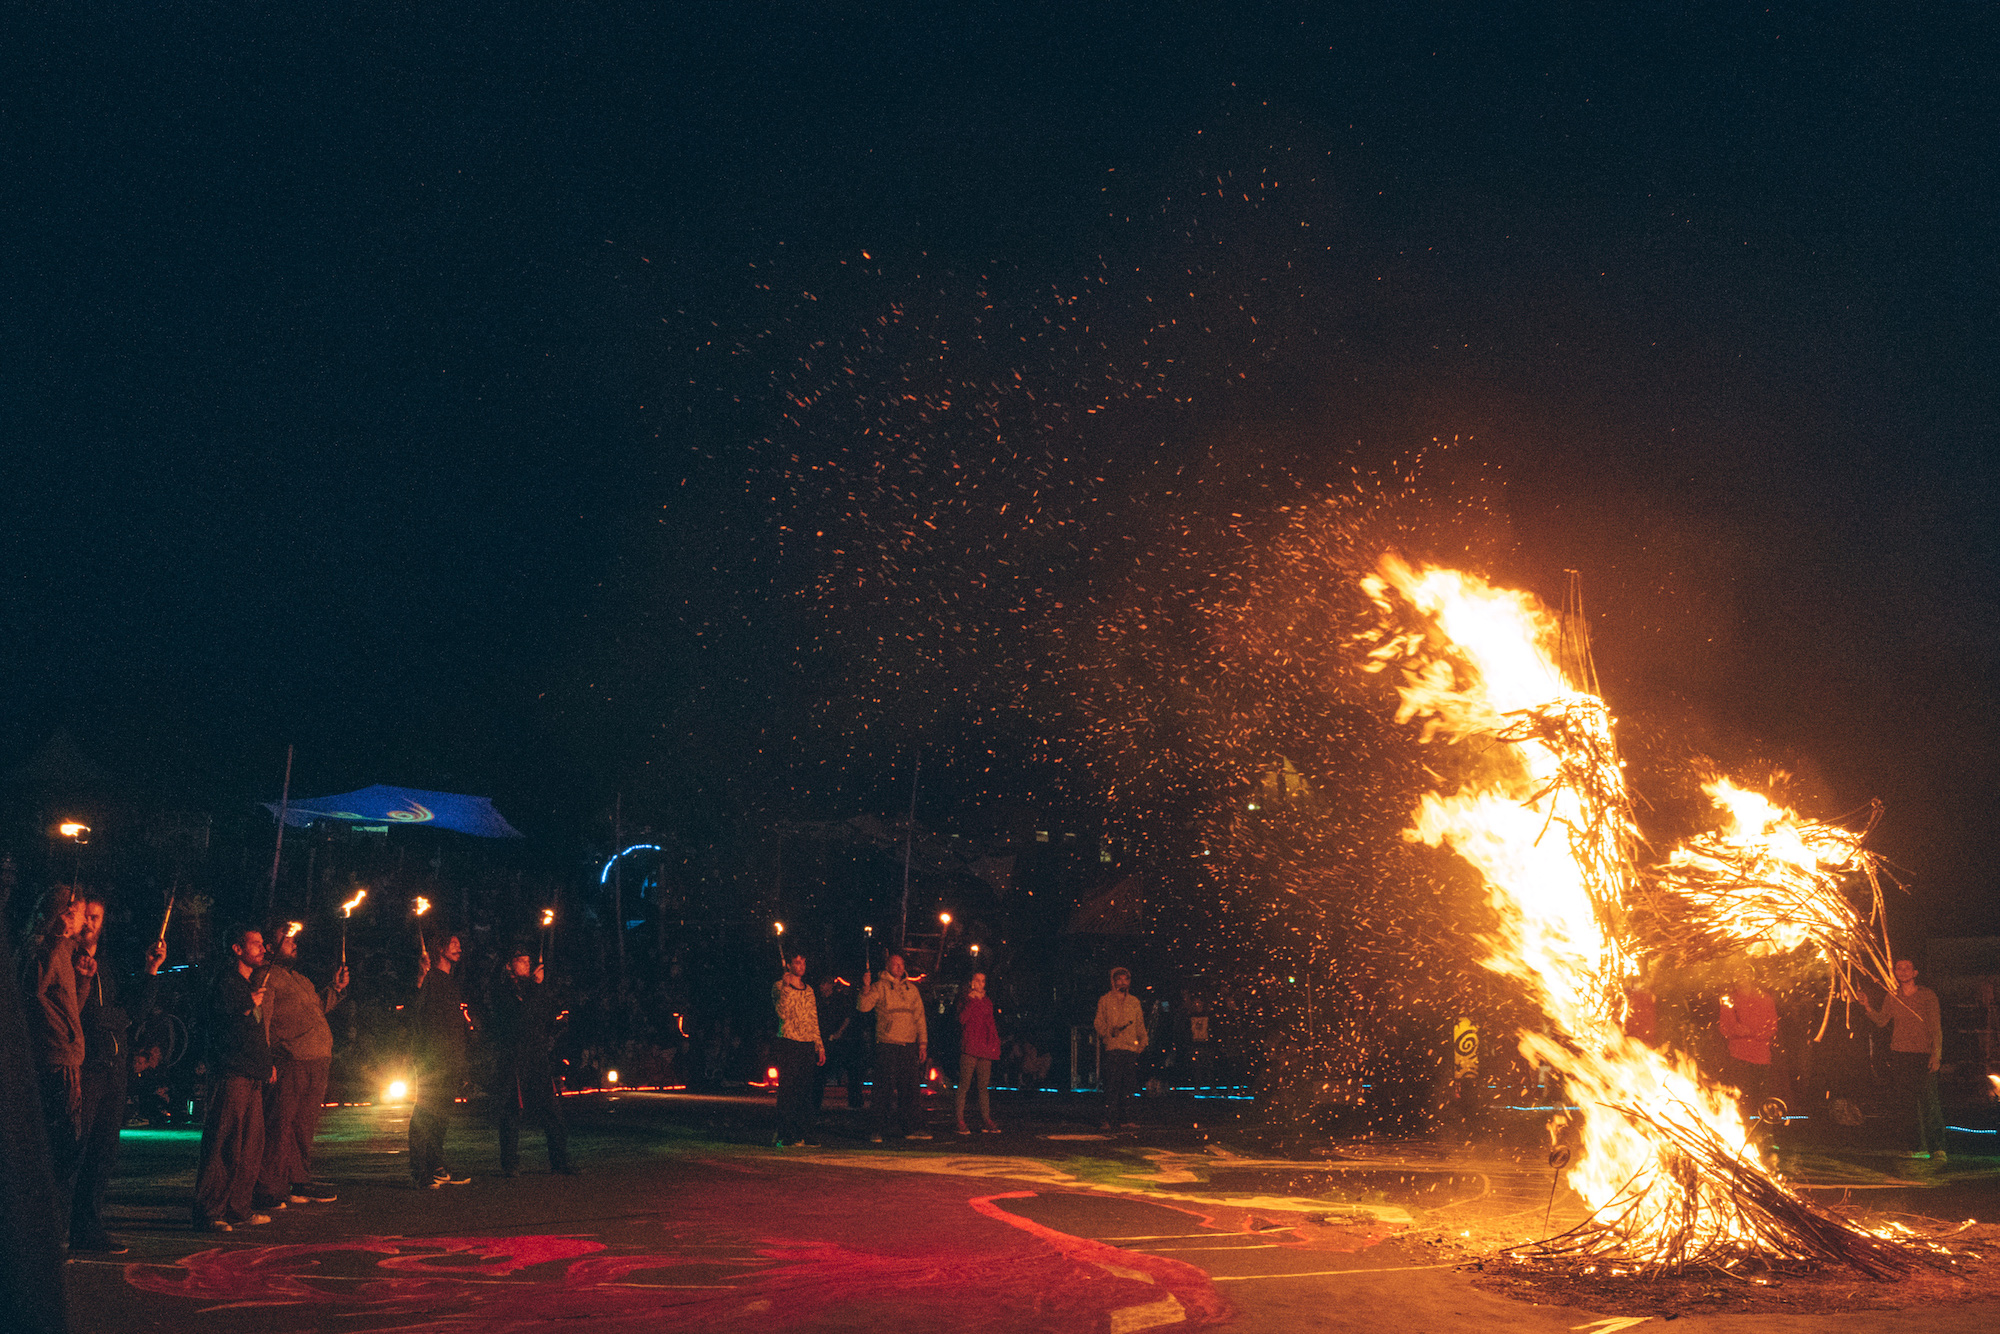 Phoenix Fire Convention, Germany. The Burning Ceremony. 晚上火舞區域的開光儀式